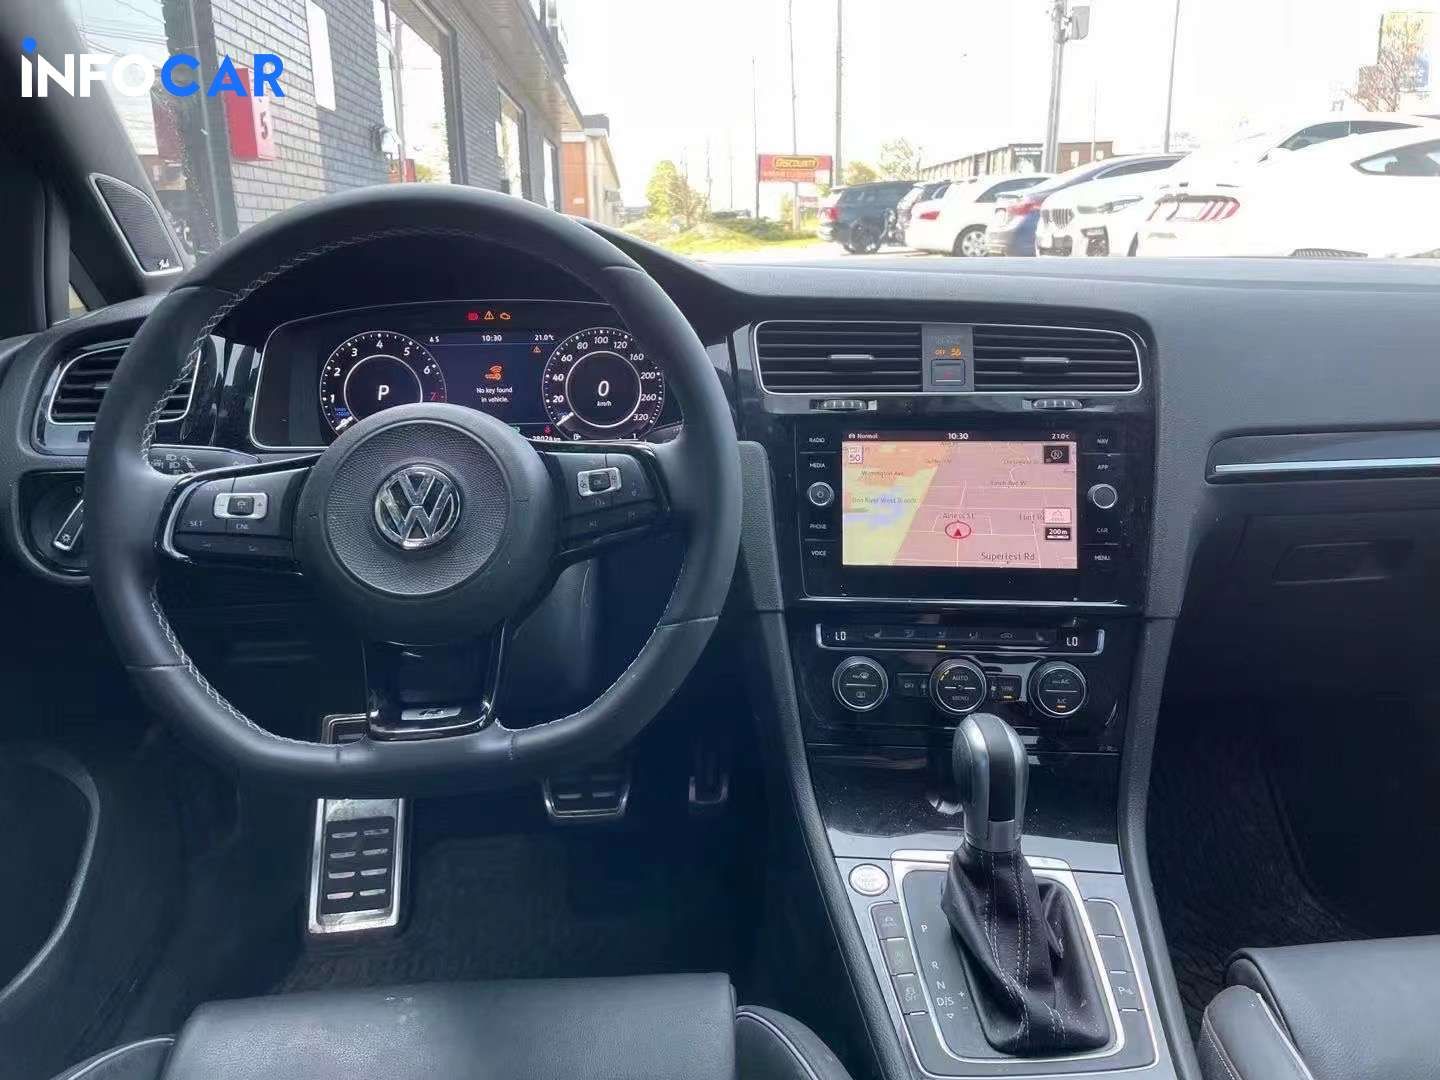 2018 Volkswagen Golf R null - INFOCAR - Toronto Auto Trading Platform